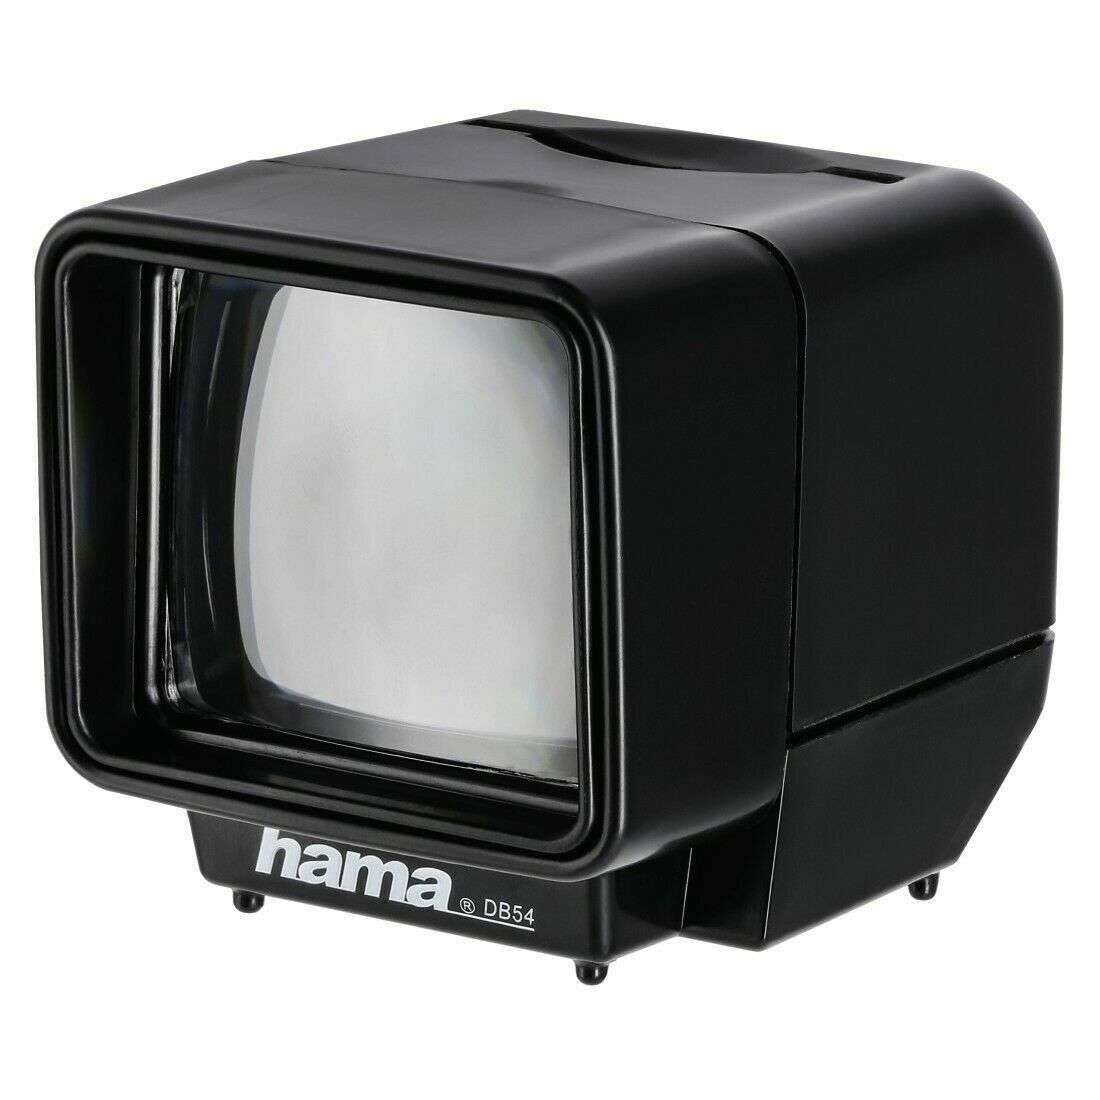 Hama Slide Viewer LED 35mm Slides 3x Magnification Battery Powered Illumination